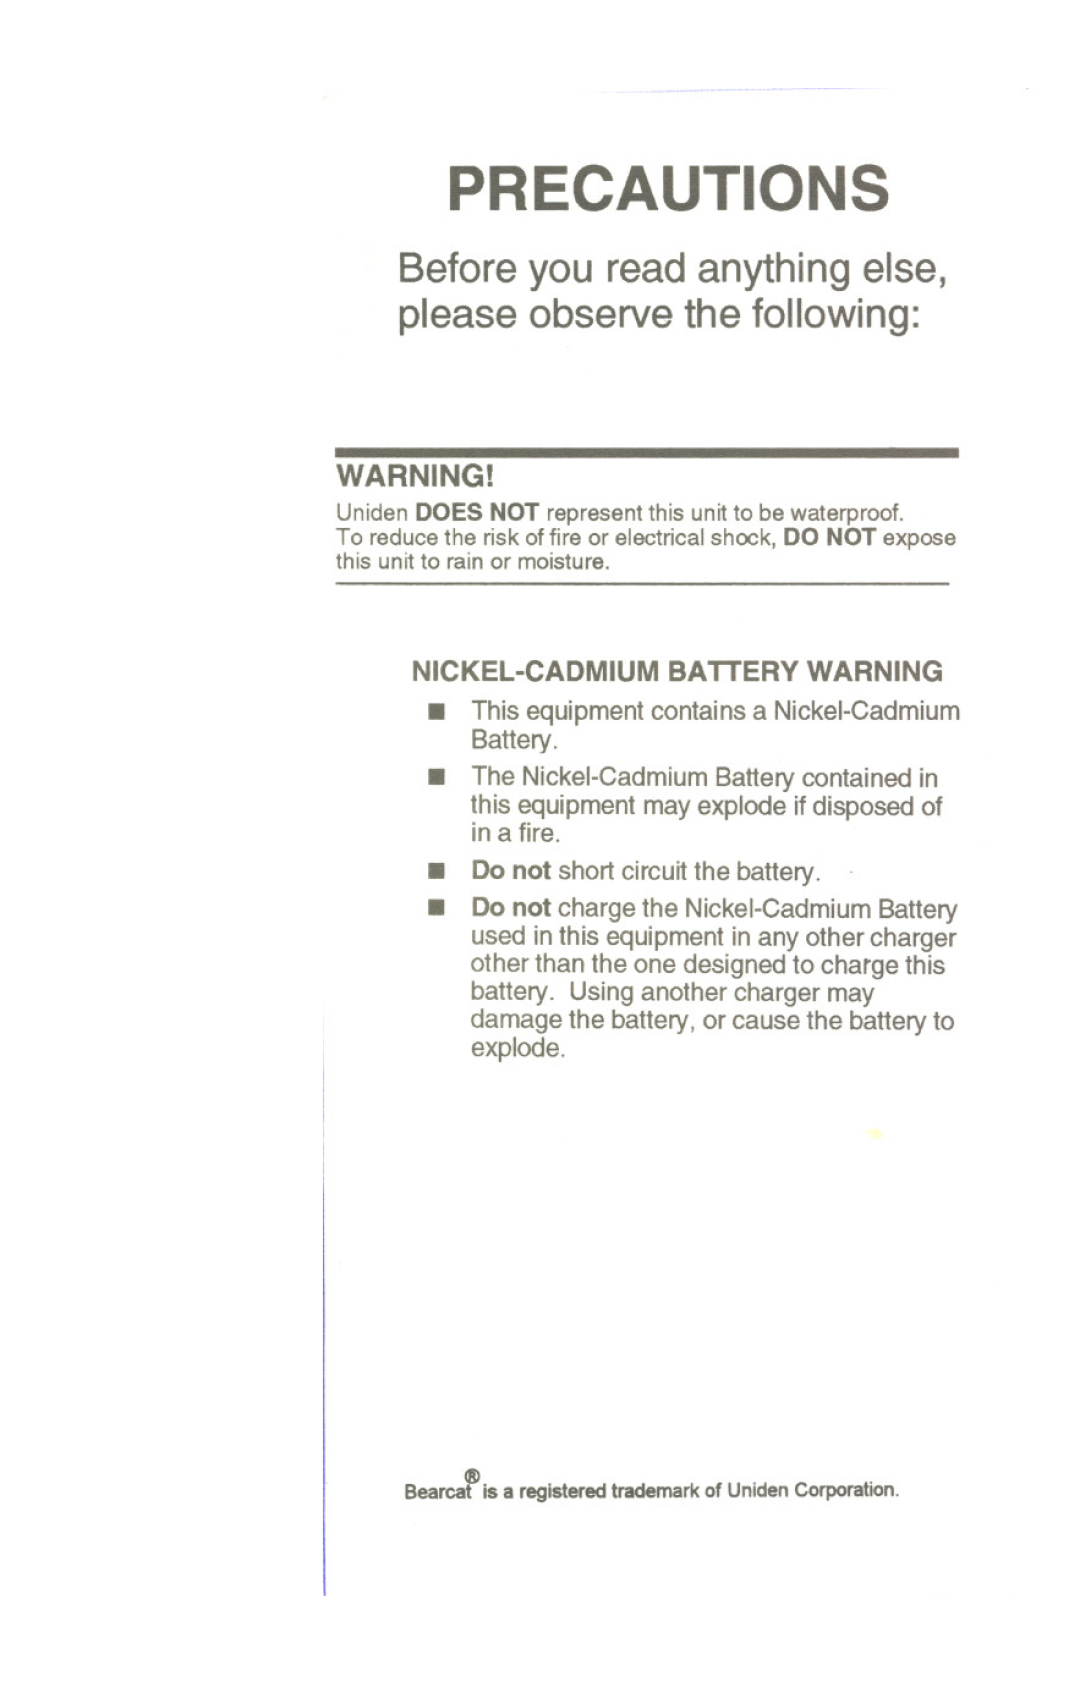 Uniden UBC 2500XLT manual Nickel-Cadmium Battery Warning, Precautions 